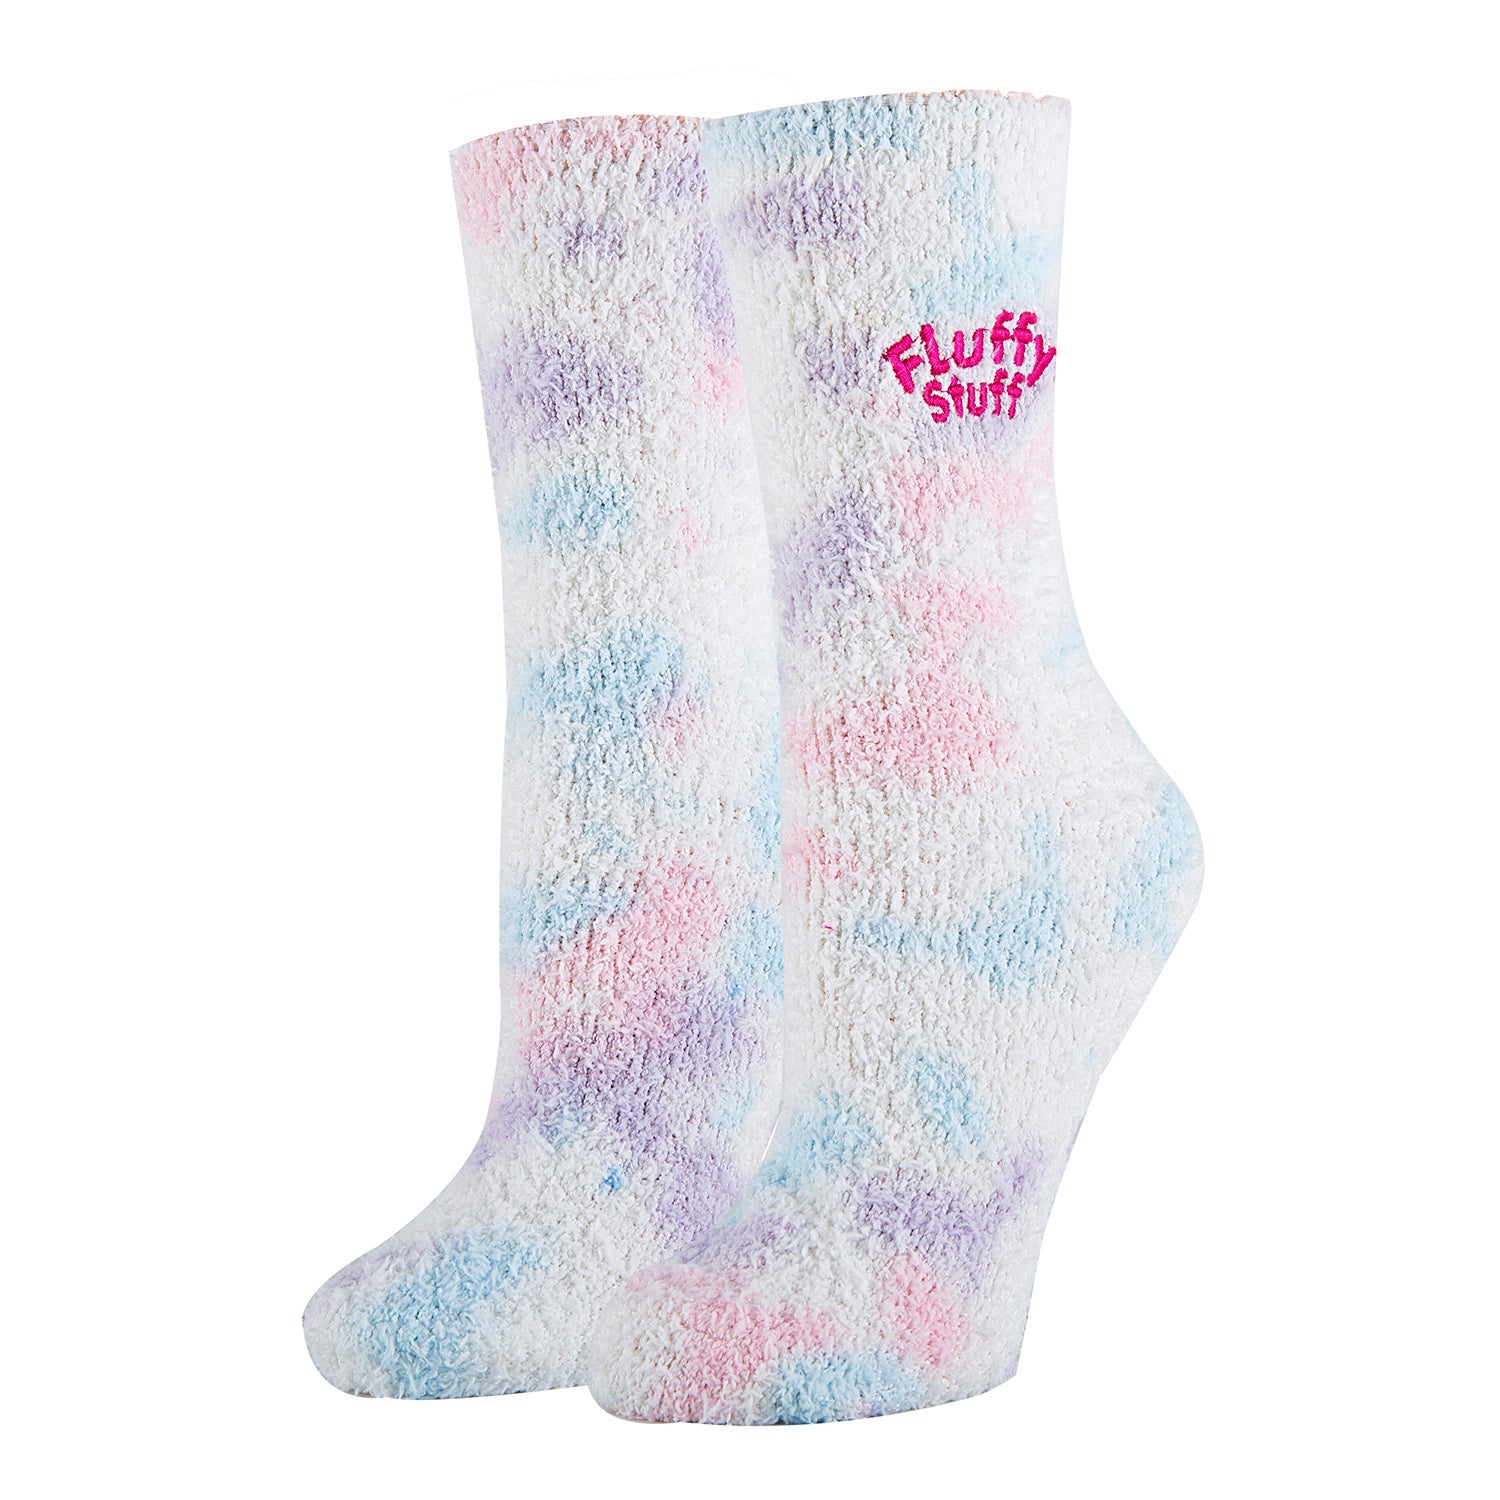 Fuzzy Socks For Women, Add More Fuzz